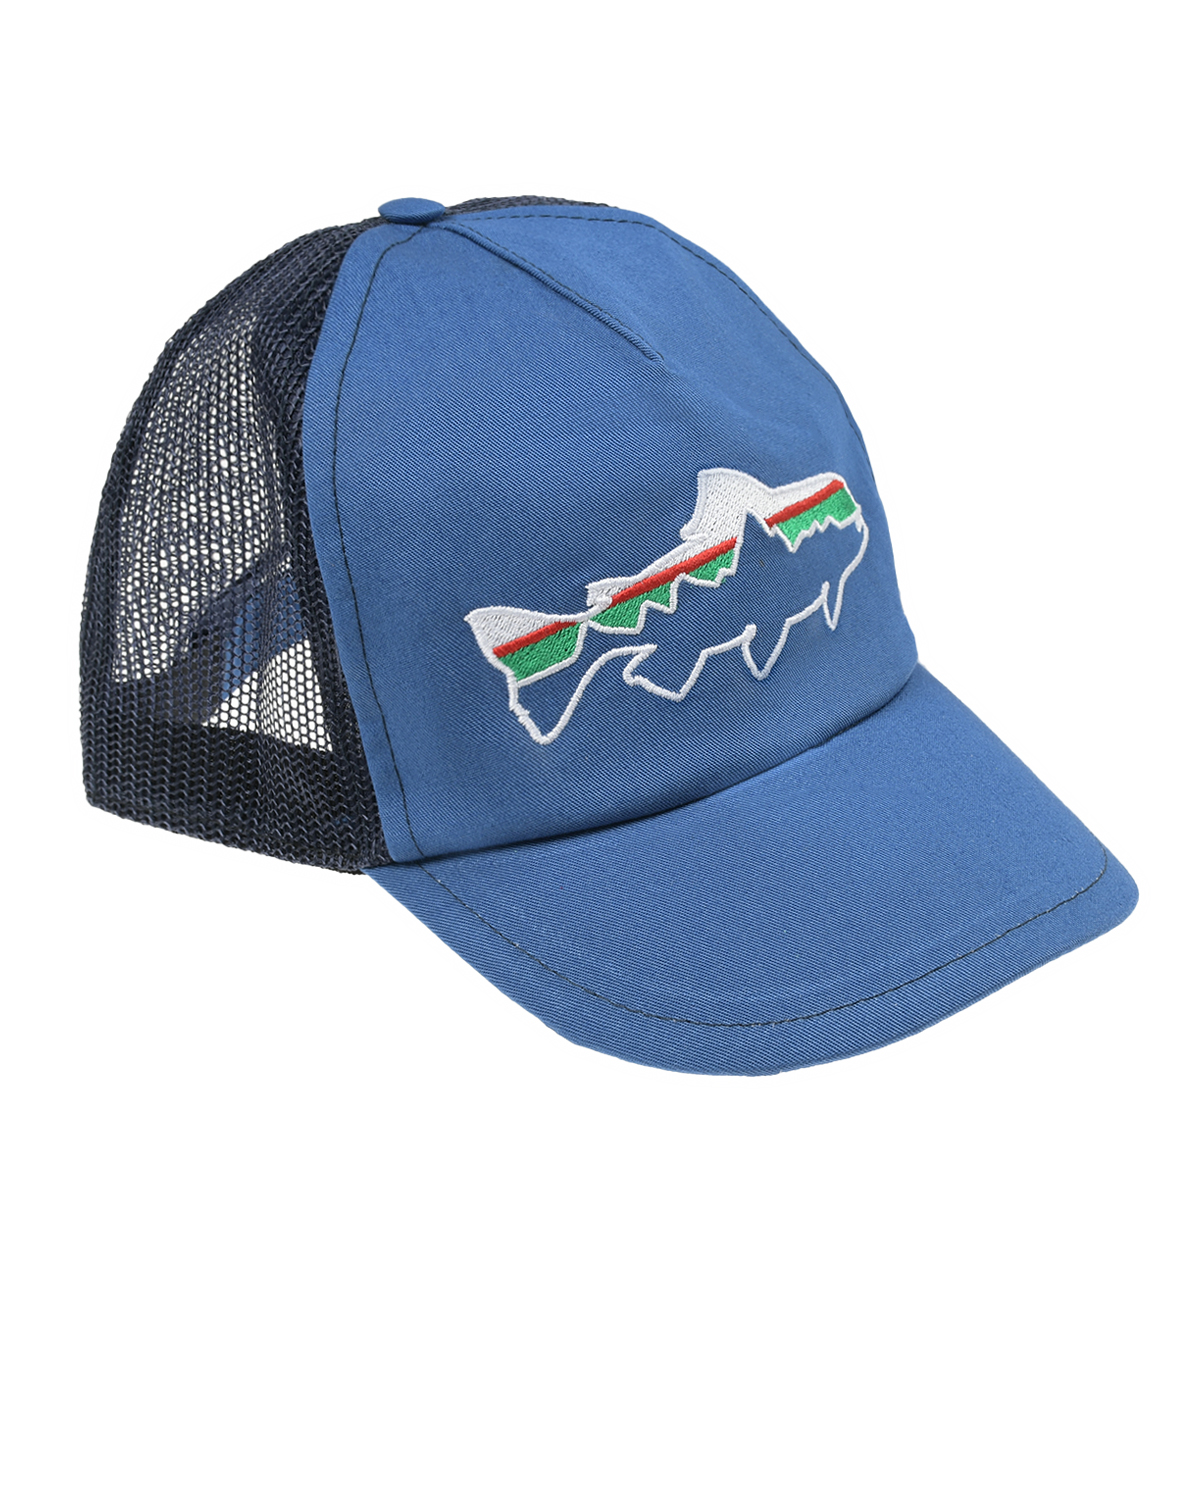 Синяя кепка с вышивкой "акула" Il Trenino, размер 54, цвет синий